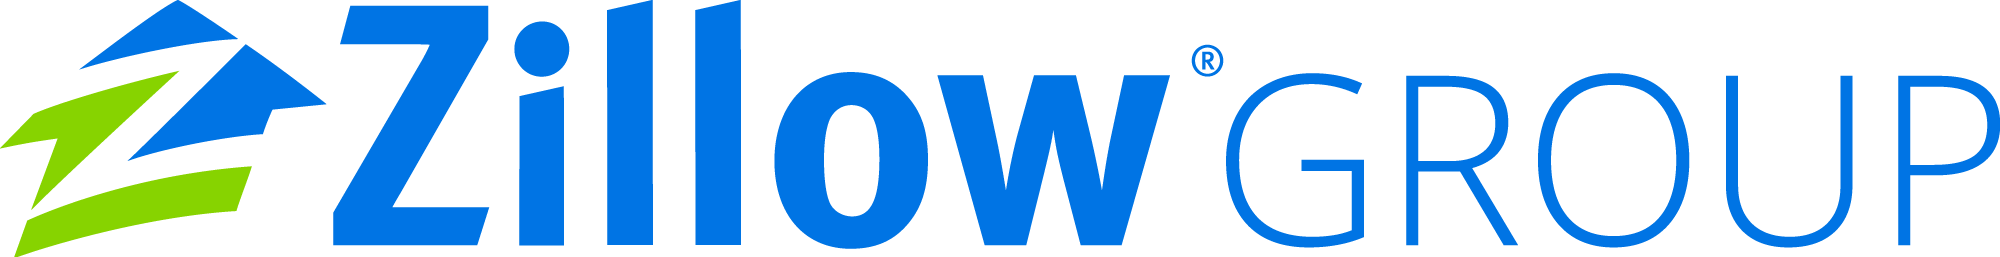 Zillow App Logo - Video Conferencing, Screen Sharing, Video Calls